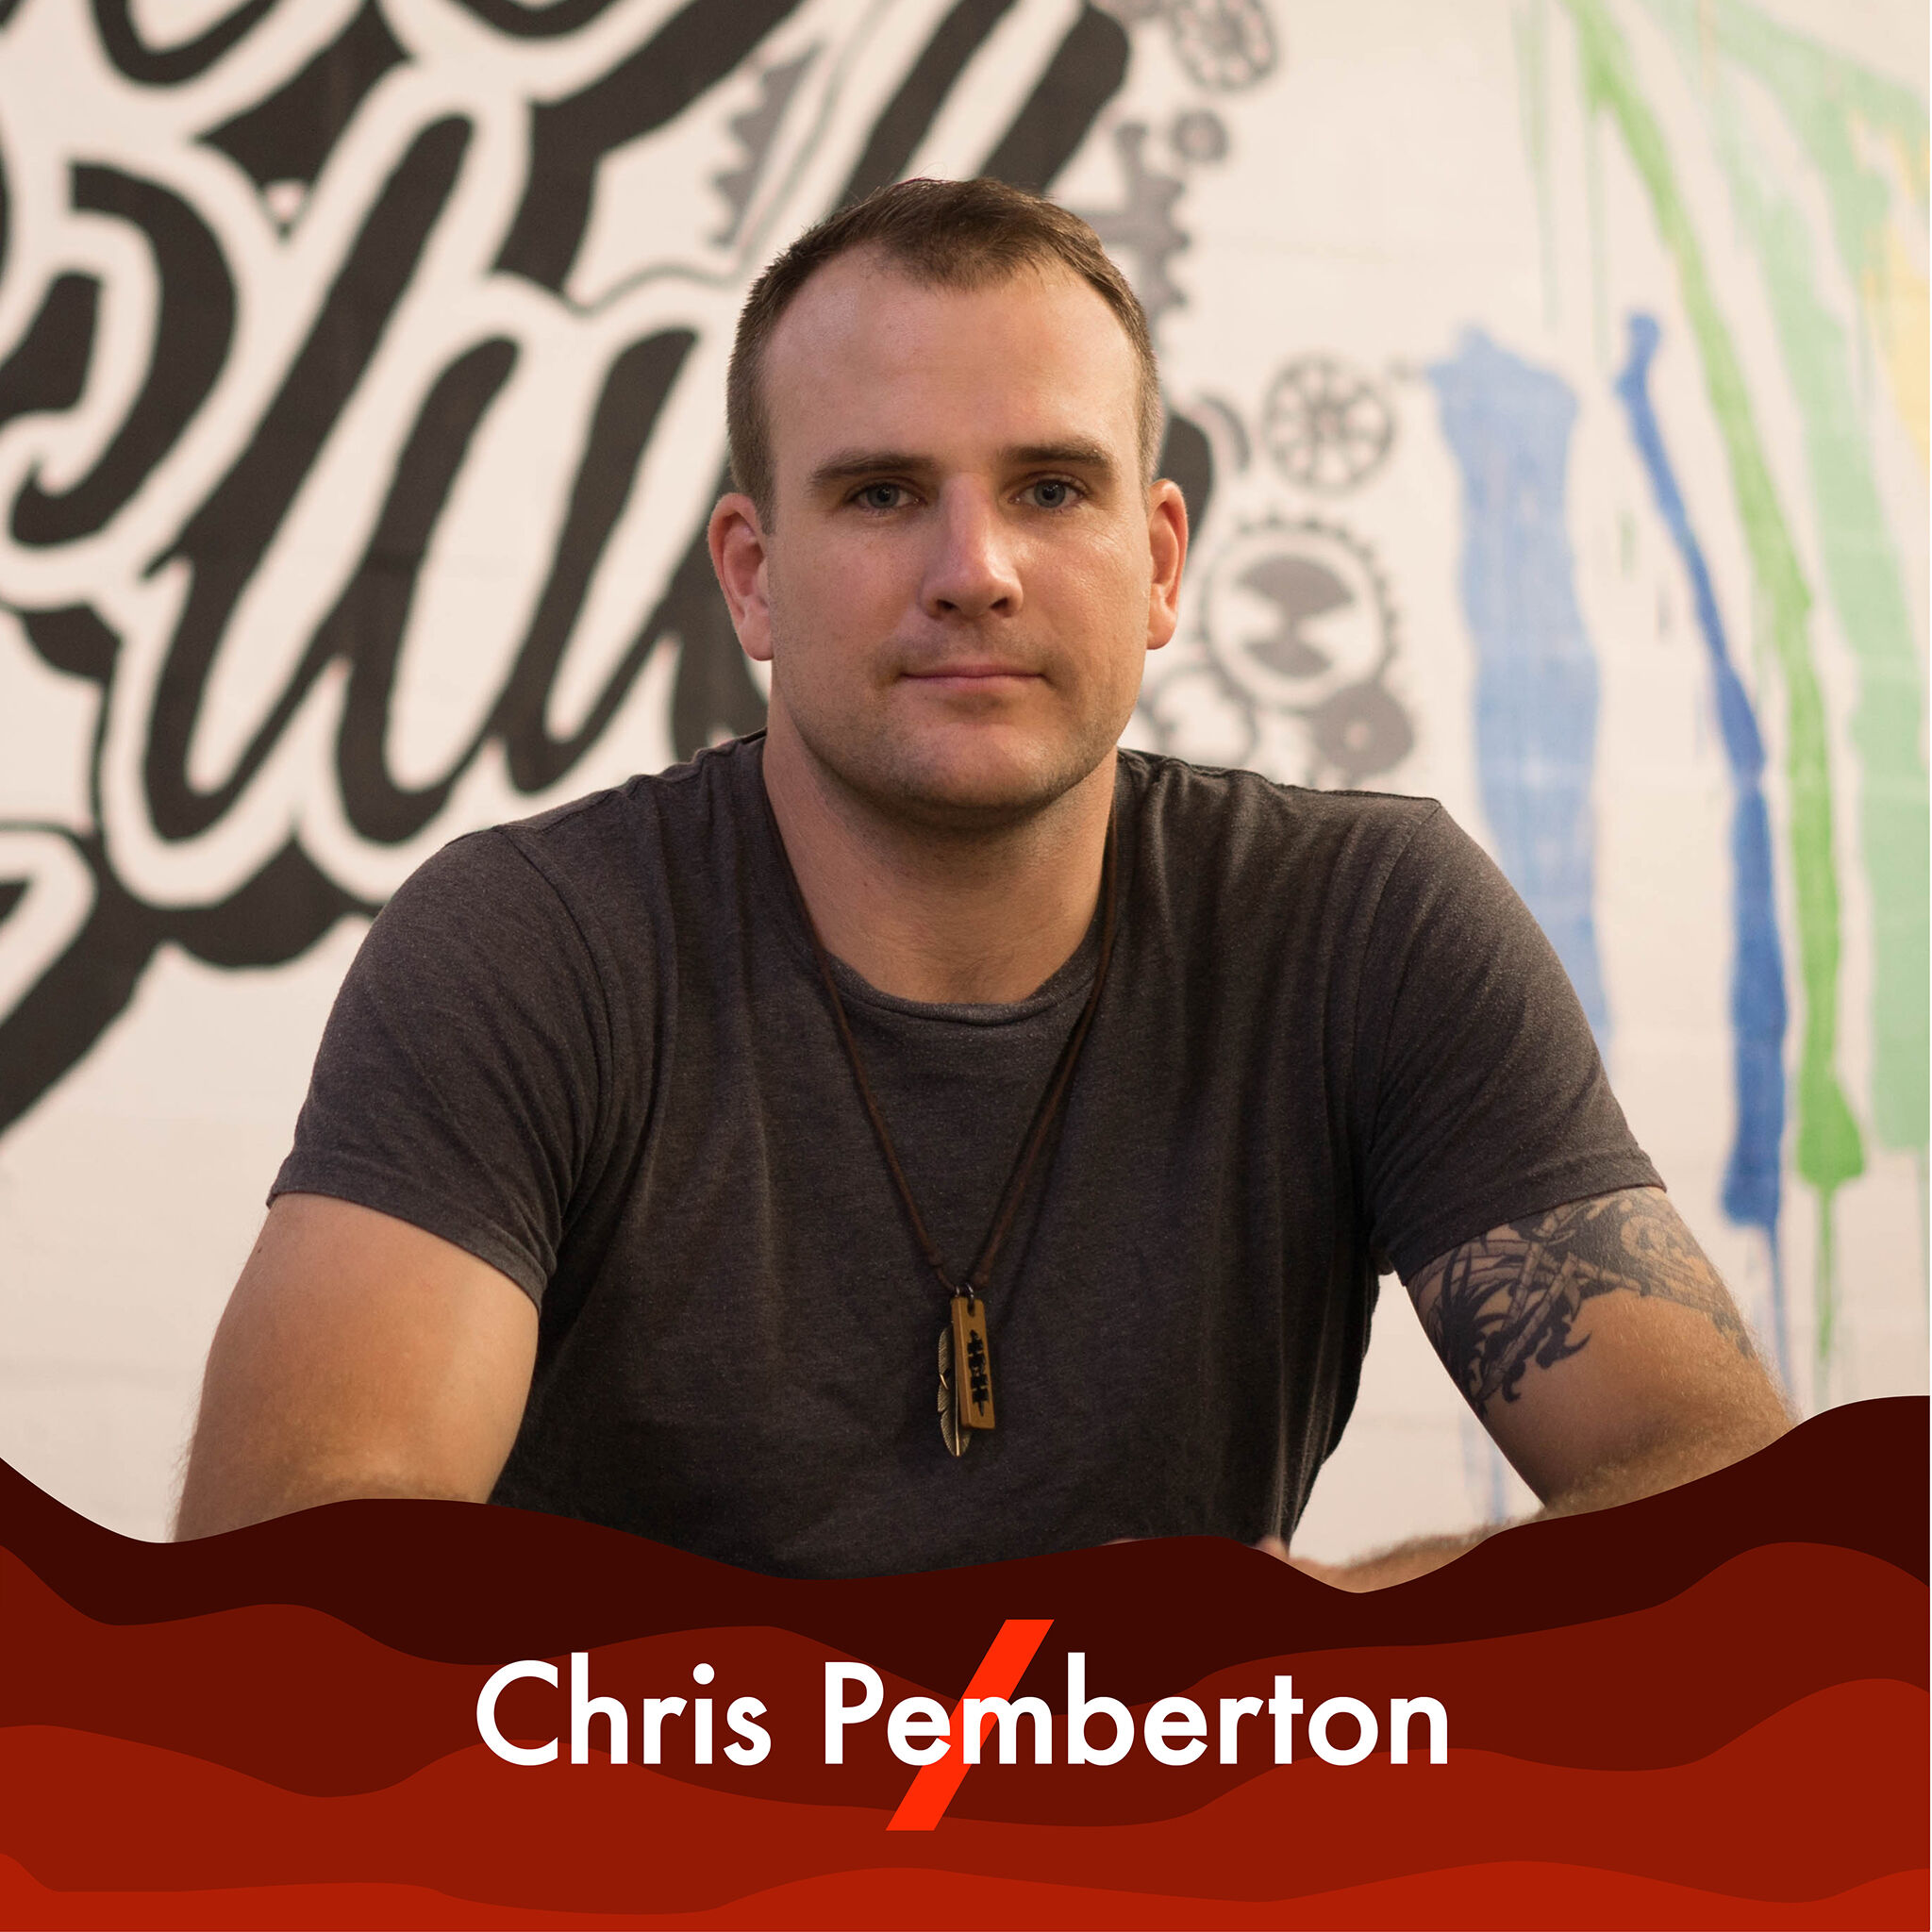 A picture of Chris Pemberton